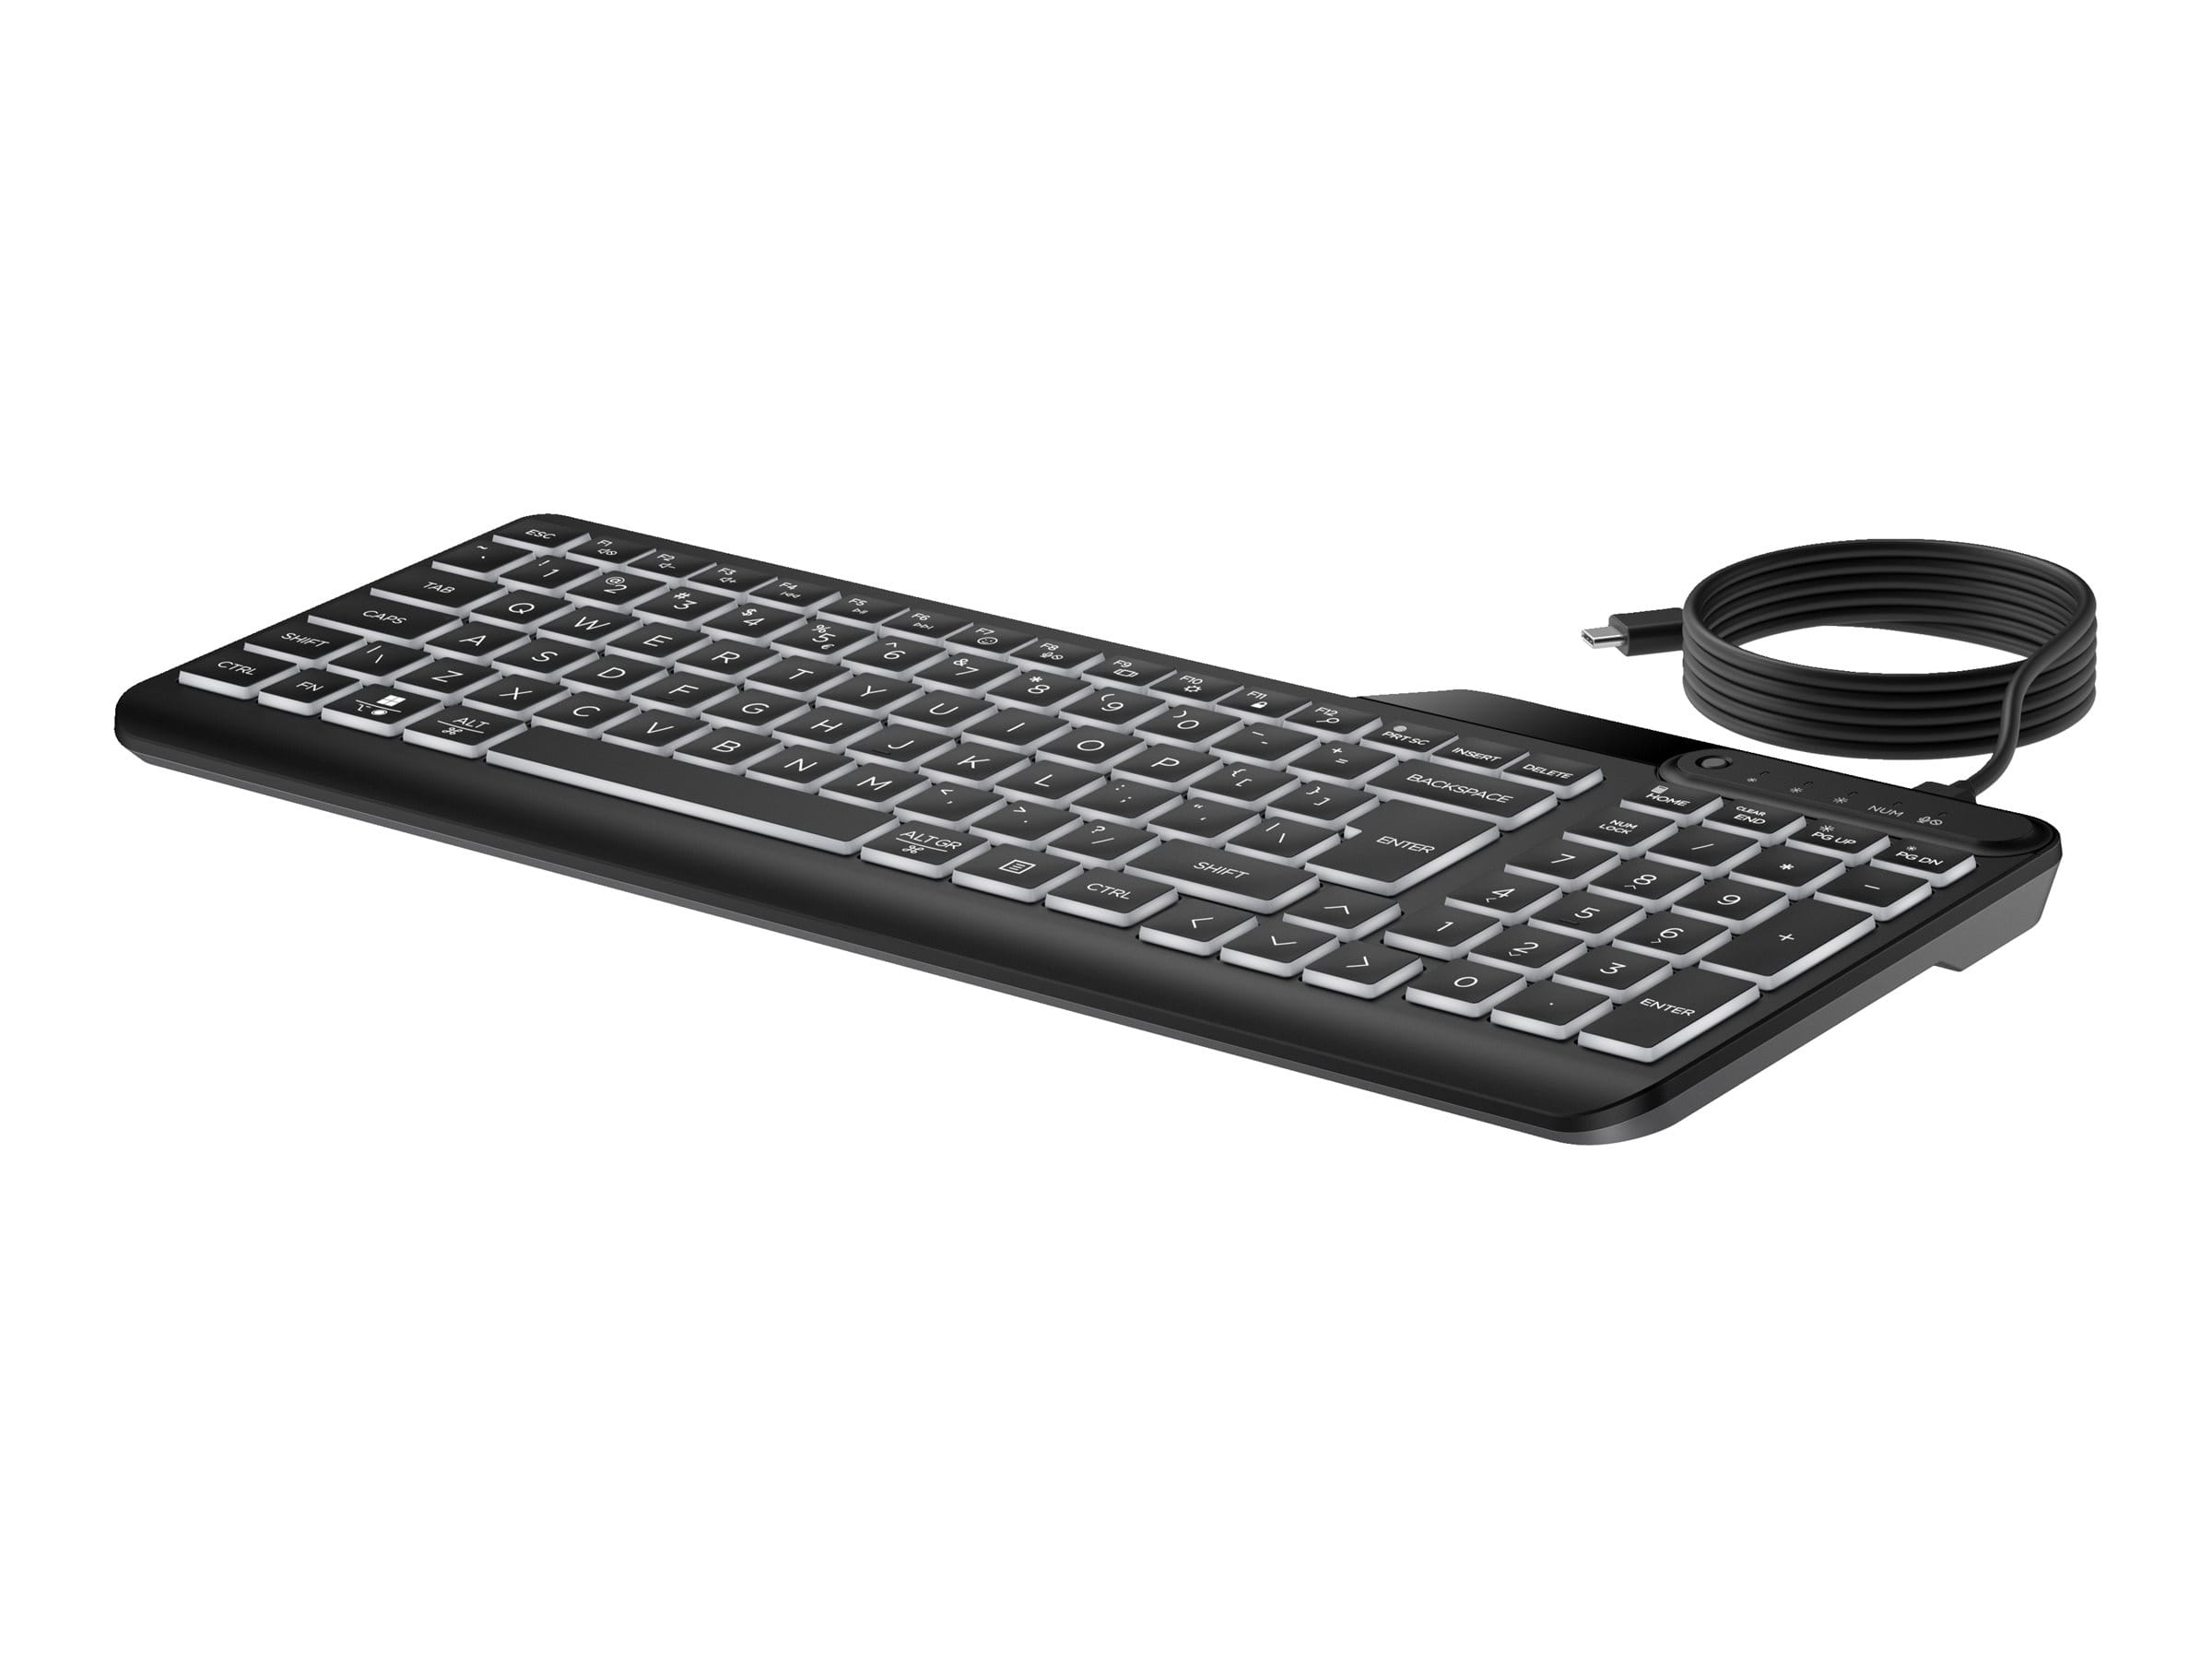 HP 400 - Tastatur - Multi-Device, kompakt, 2-Zonen-Layout, geringer Tastenhub, 12 programmierbare Tasten